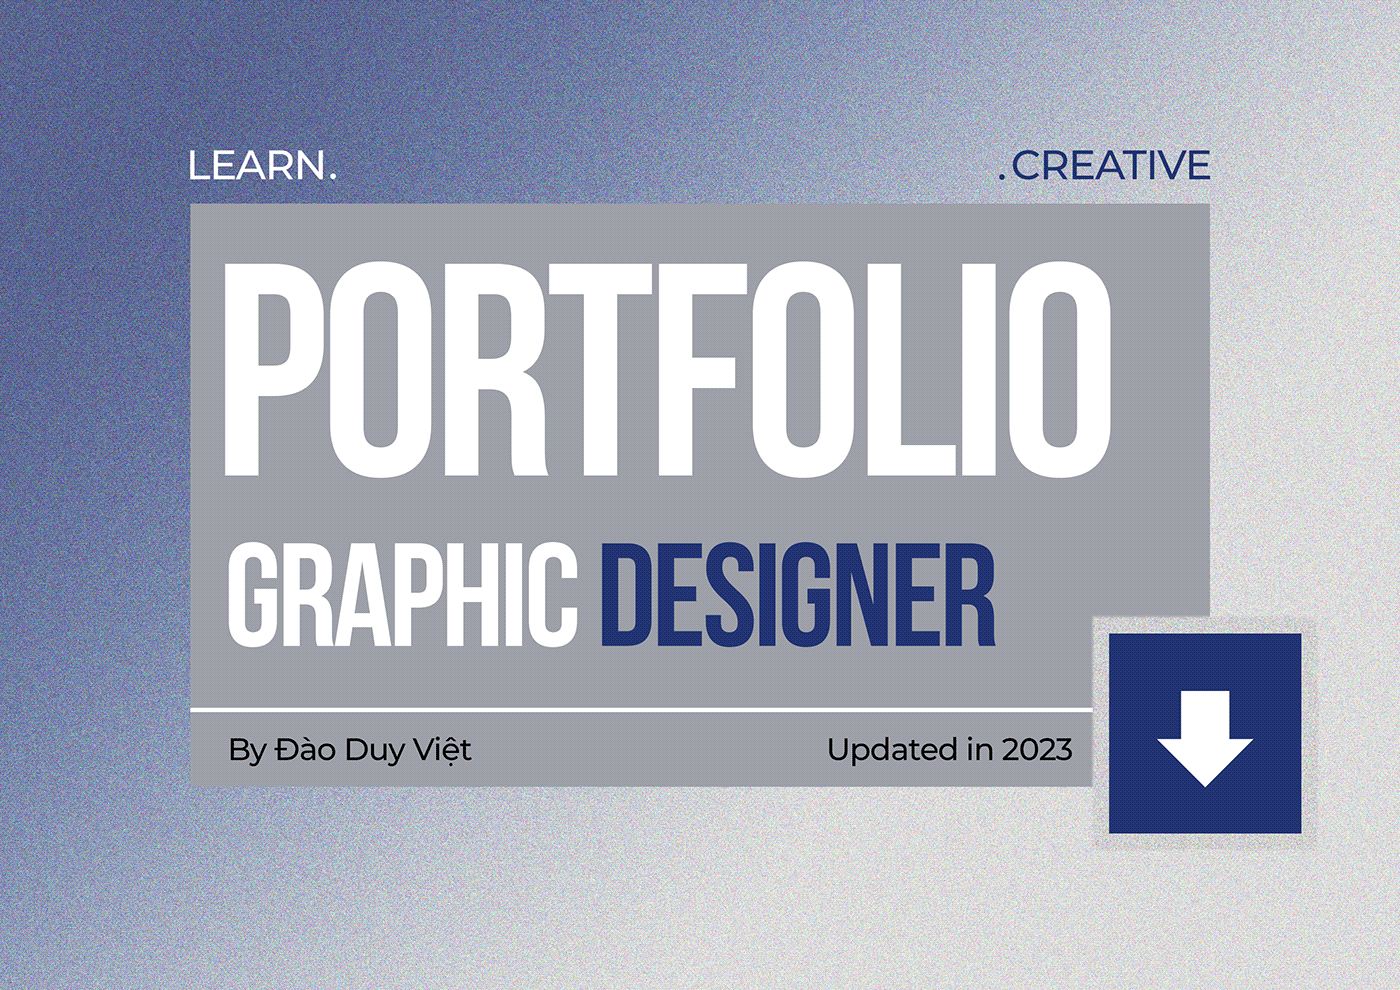 portfolio Portfolio Design Graffiti bboy branding  brand identity Graphic Designer Social media post Advertising  marketing  